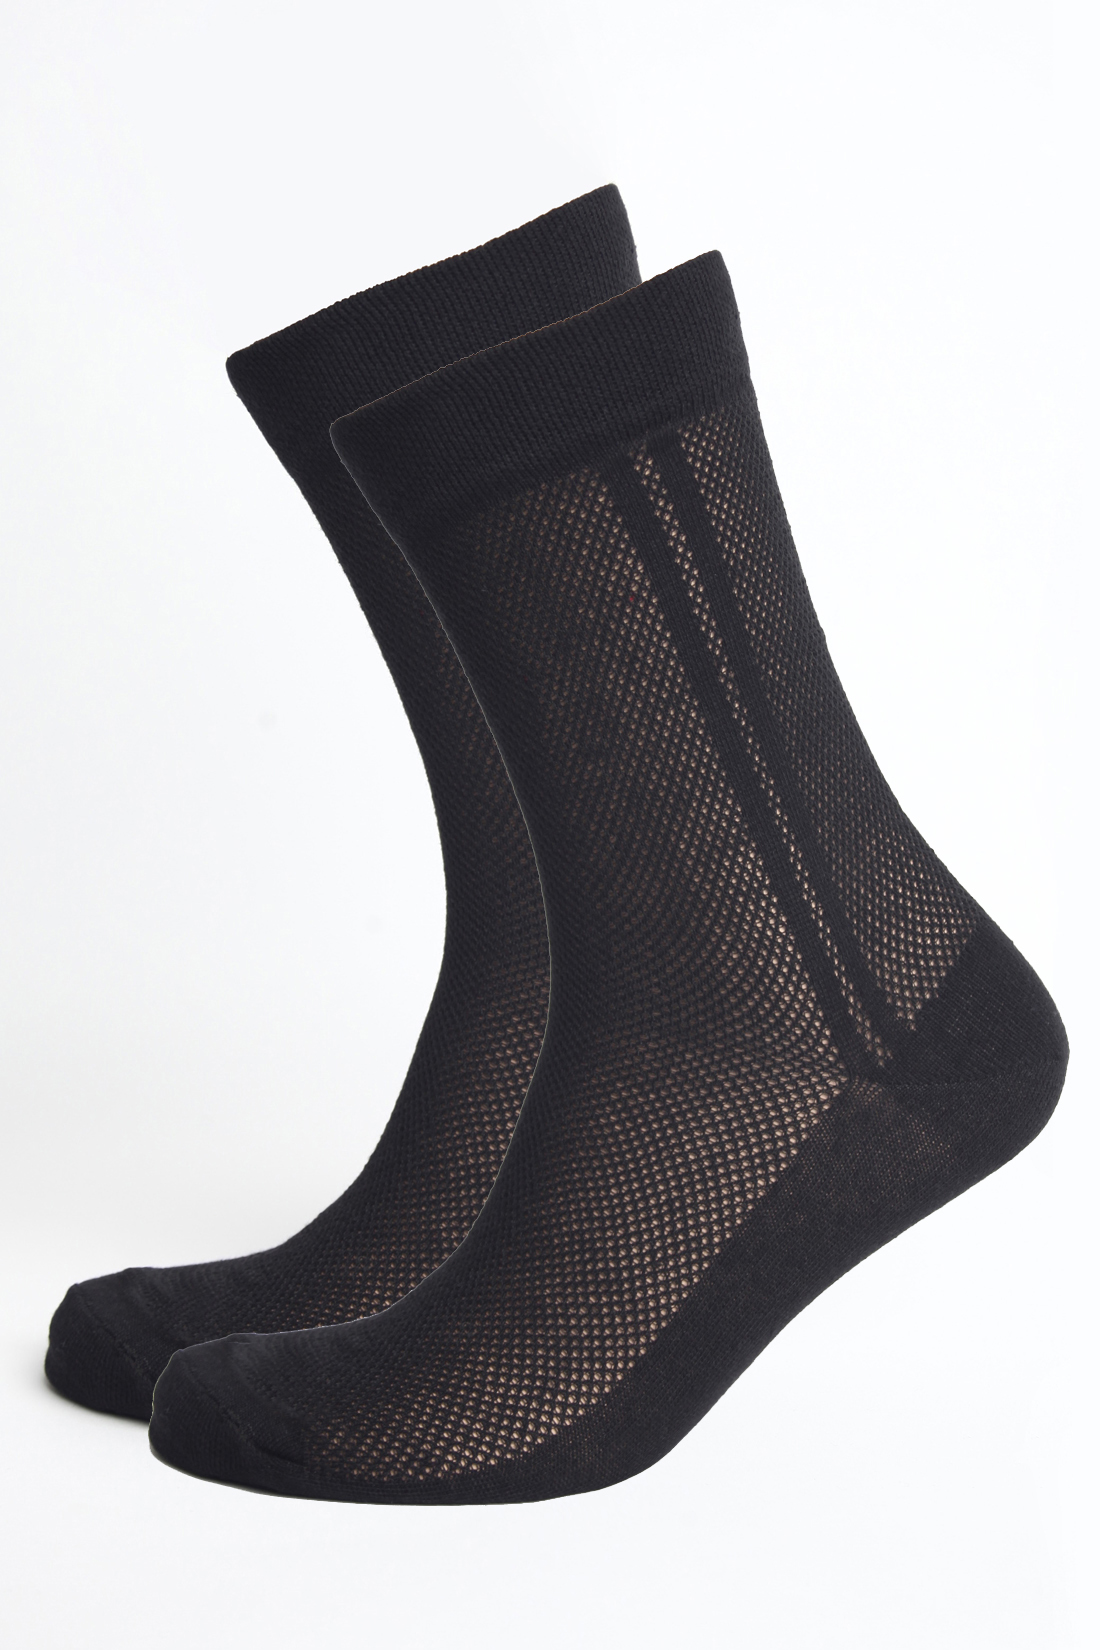 Мужские носки, 2 пары (арт. baon B891104), размер 43/45, цвет черный